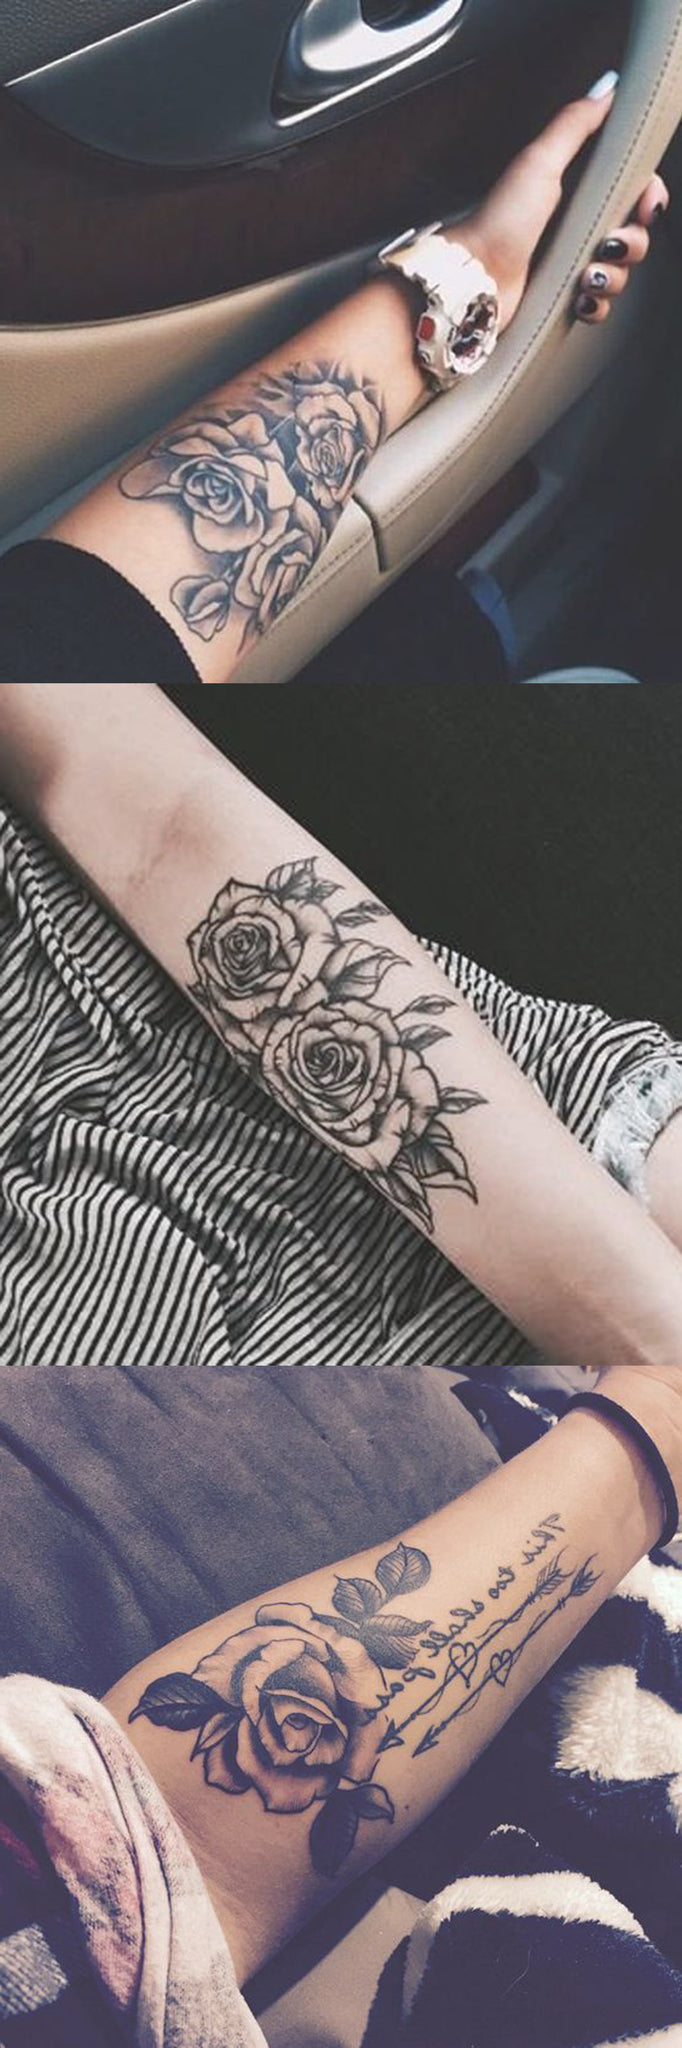 Black Rose Forearm Tattoo Ideas - Girly Realistic Floral Flower Arm Tat - rose arm sleeve tattoo Edit  rose arm sleeve tattoo  tatuaje de la manga del brazo rosa - www.MyBodiArt.com